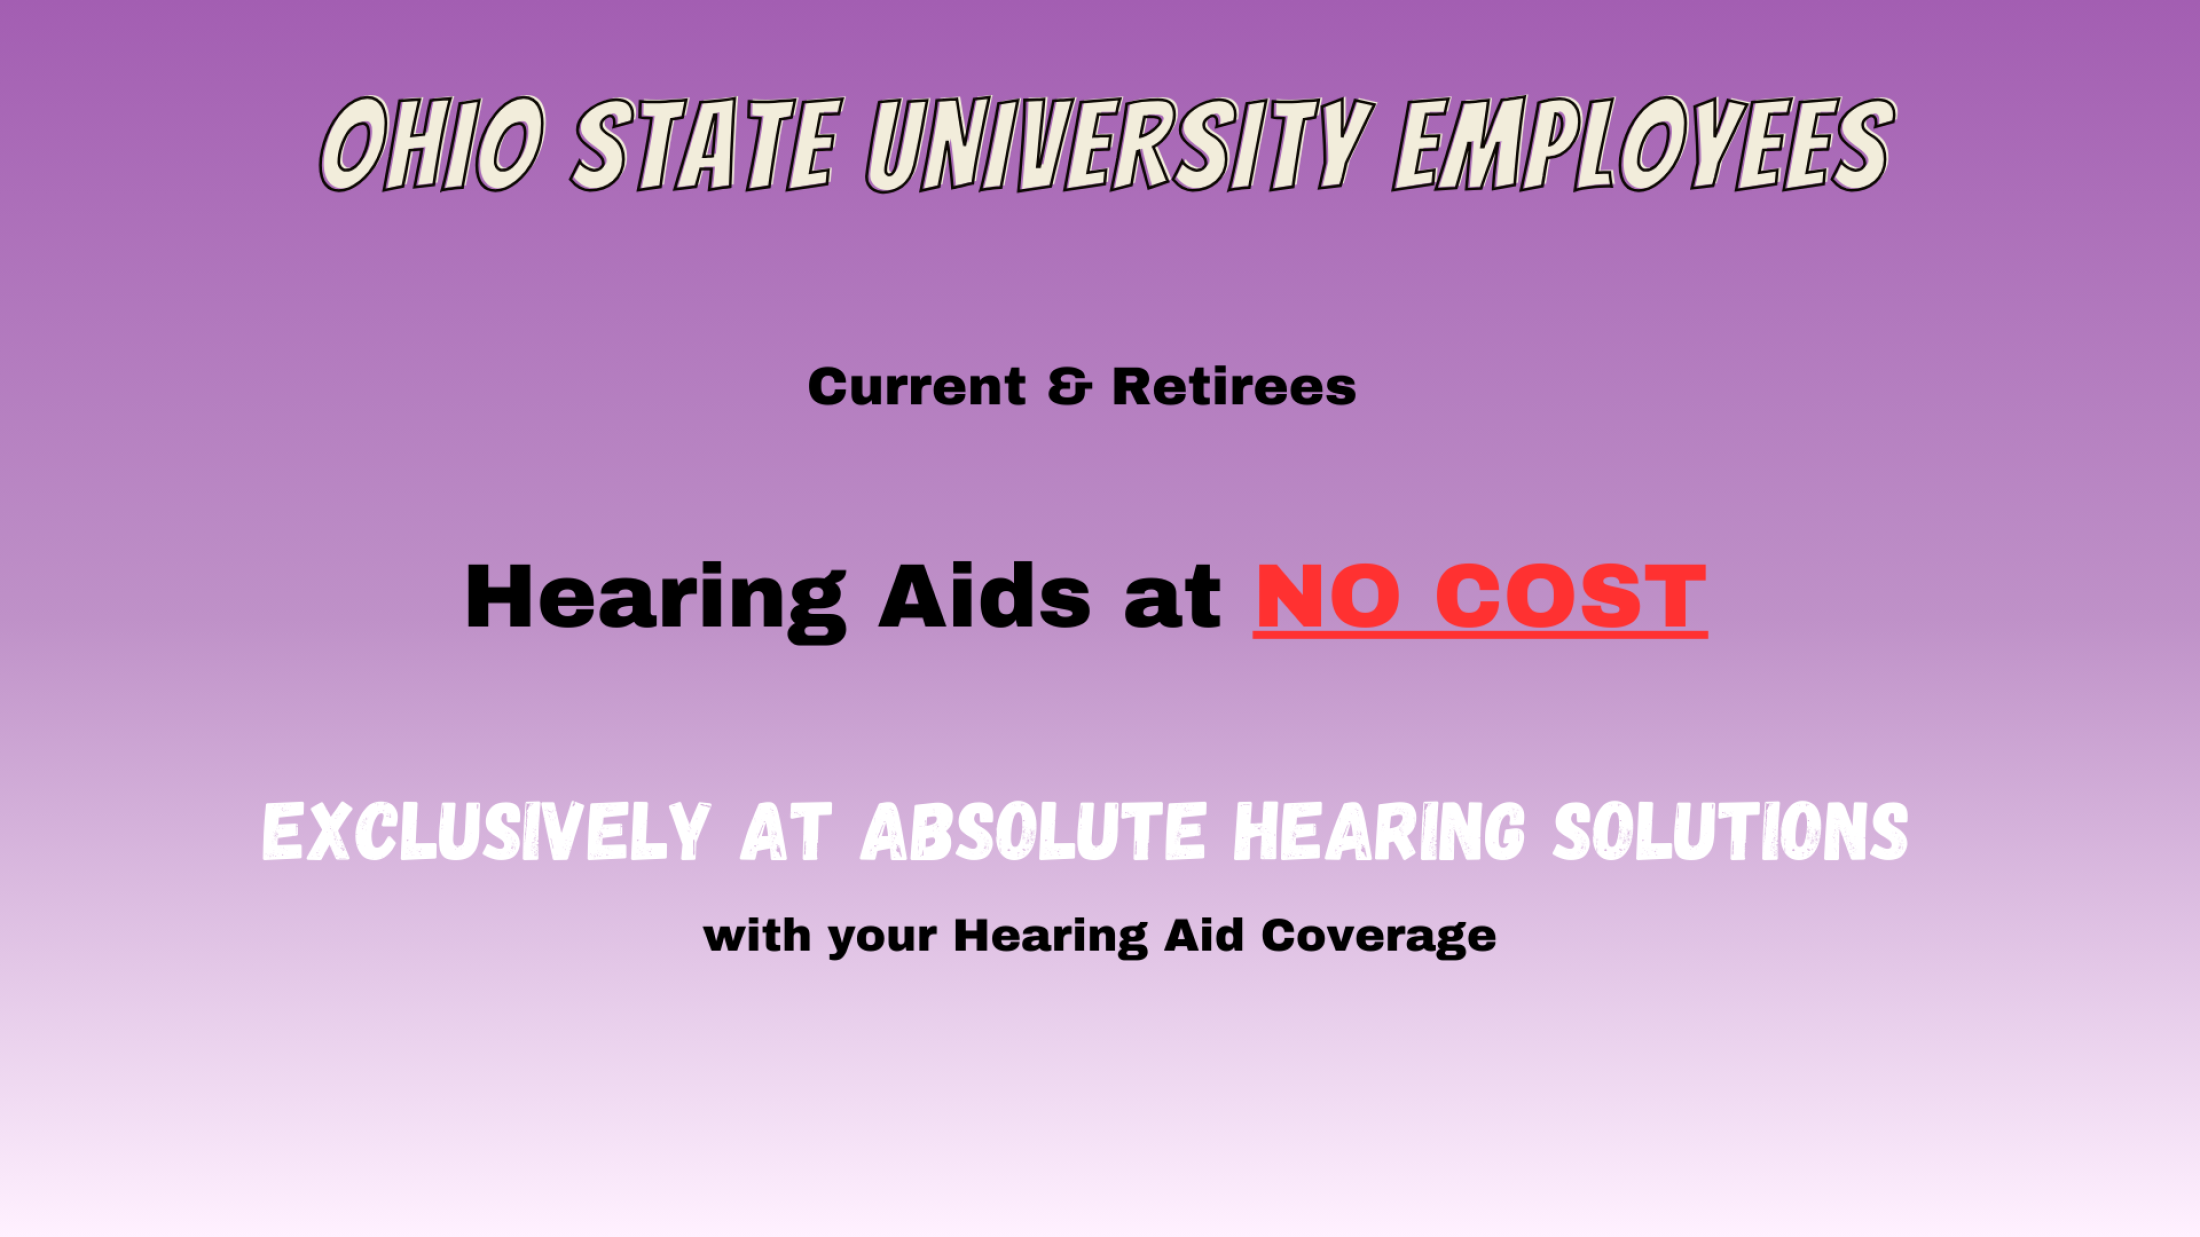 Ohio State University Employees Get Free Hearing Aids